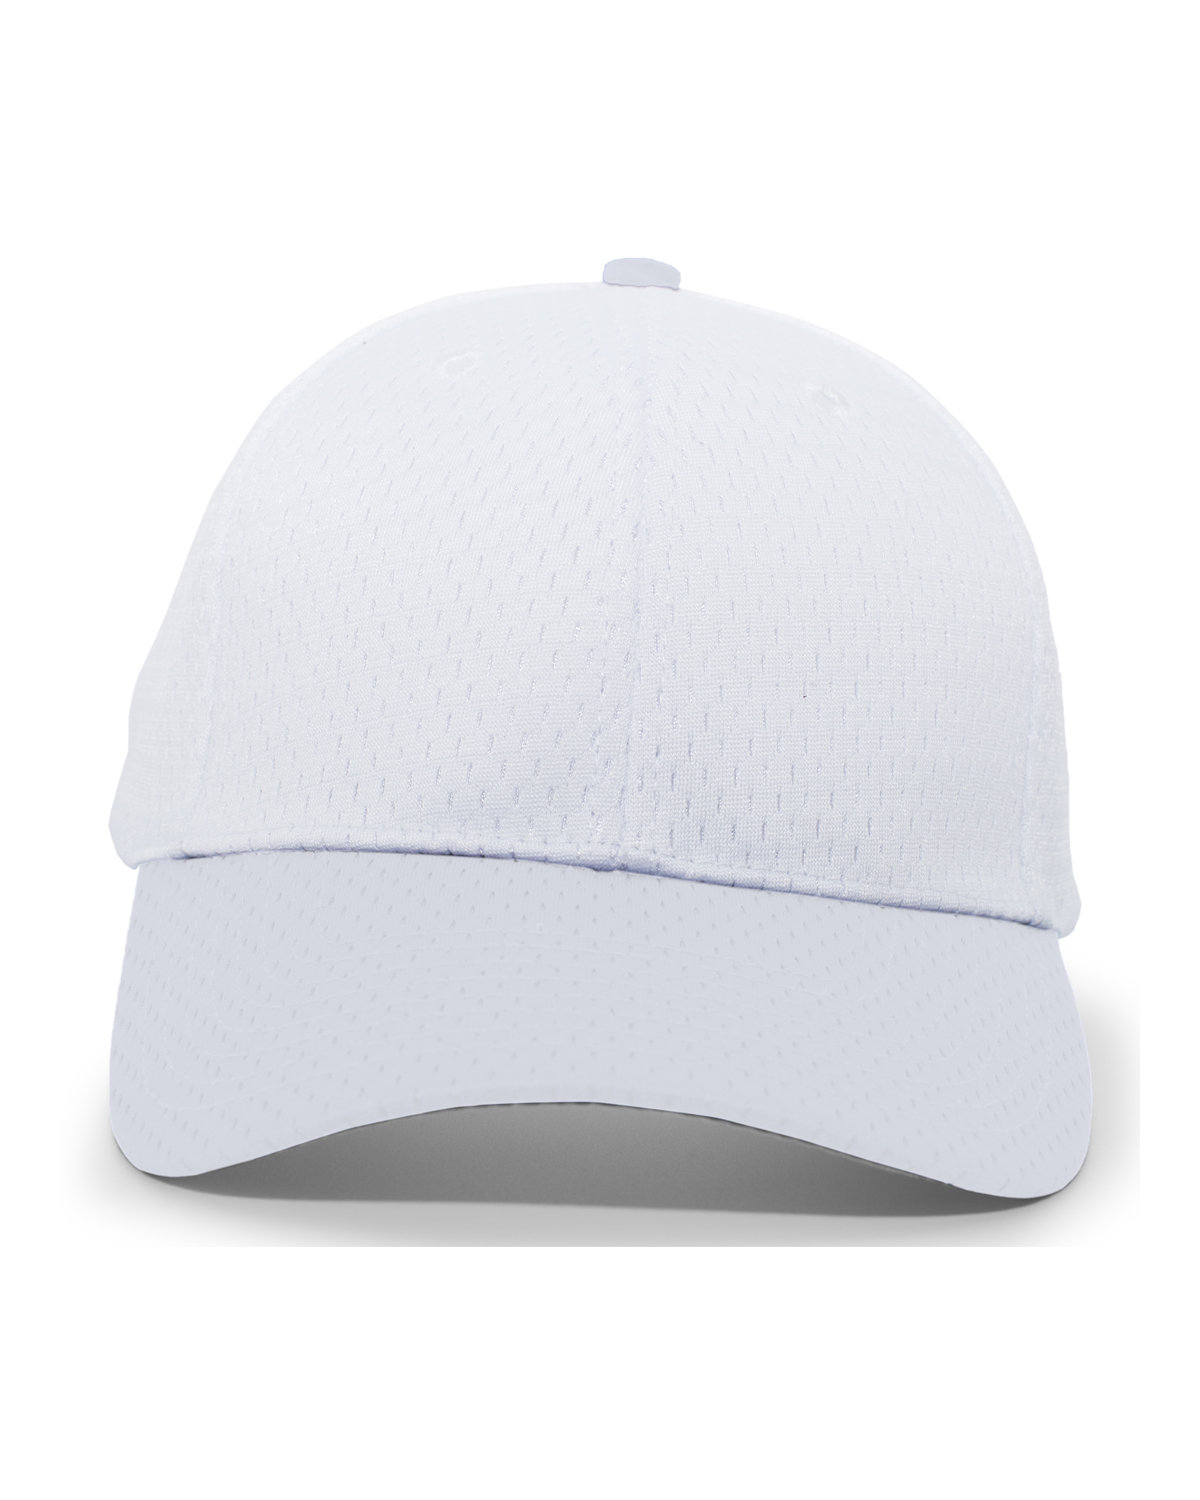 Coolport Mesh Cap-Pacific Headwear